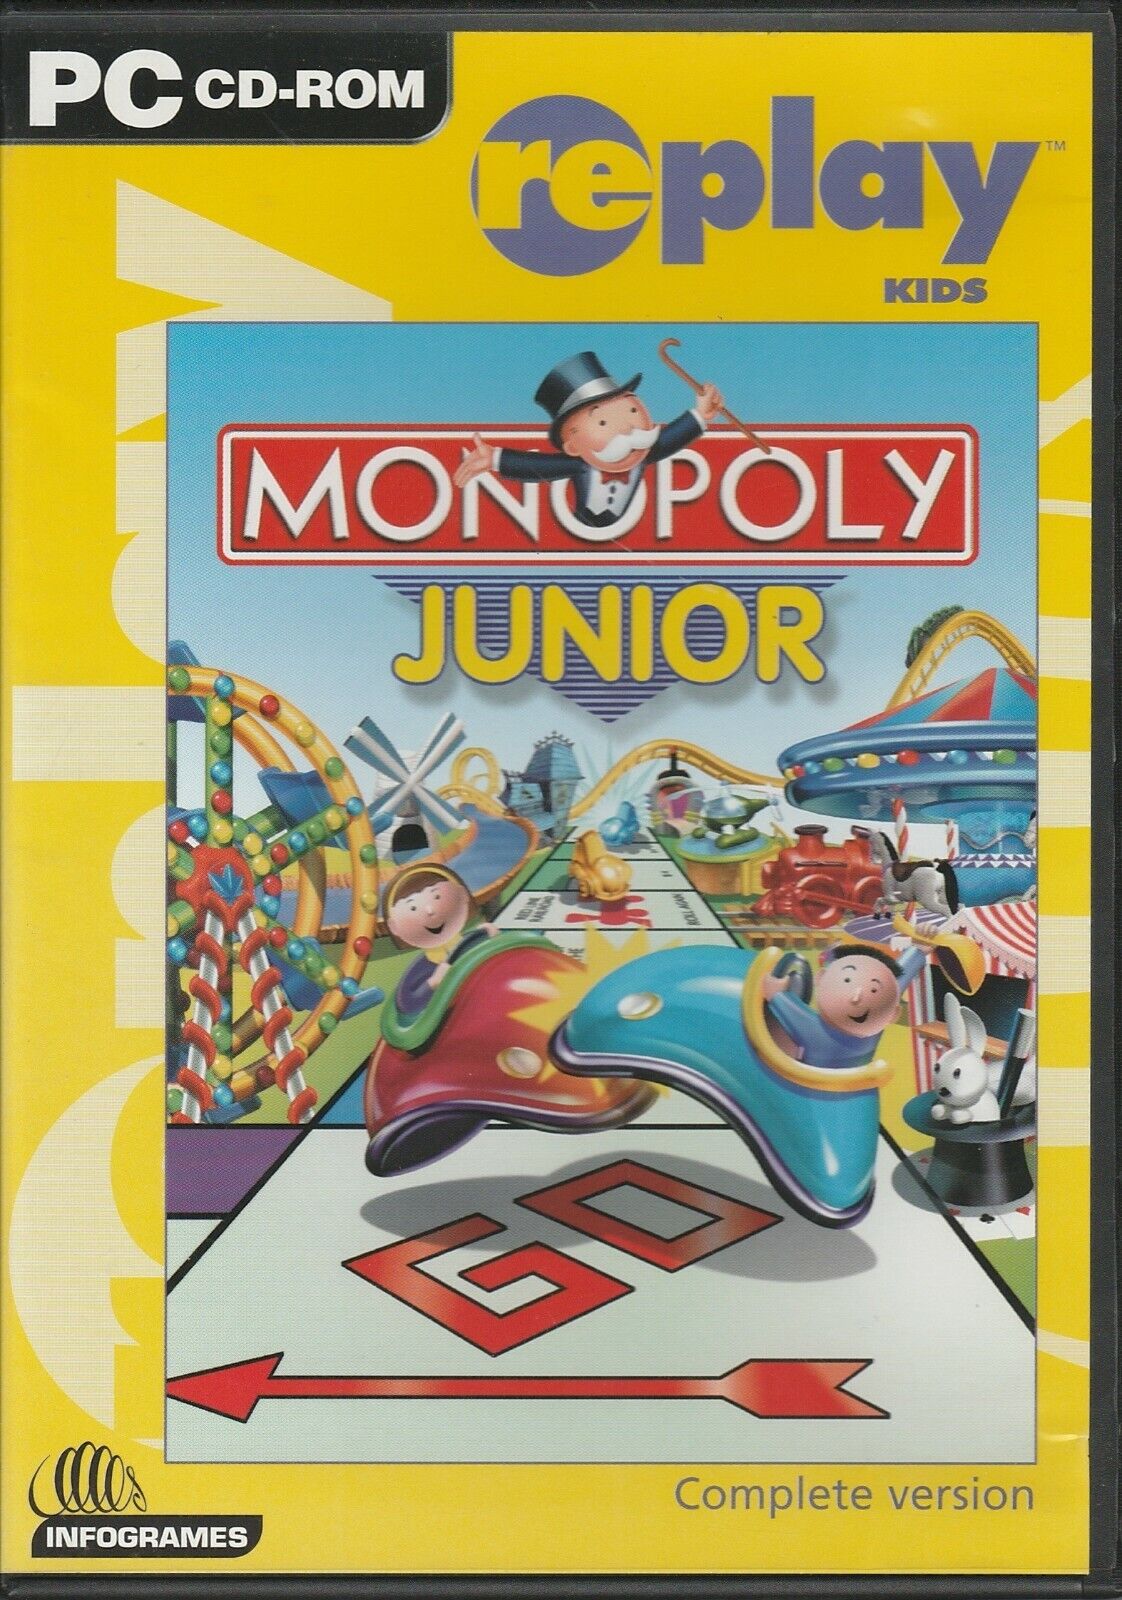 Monopoly Junior PC CD-ROM Game (Replay Kids) 3546430021248 eBay